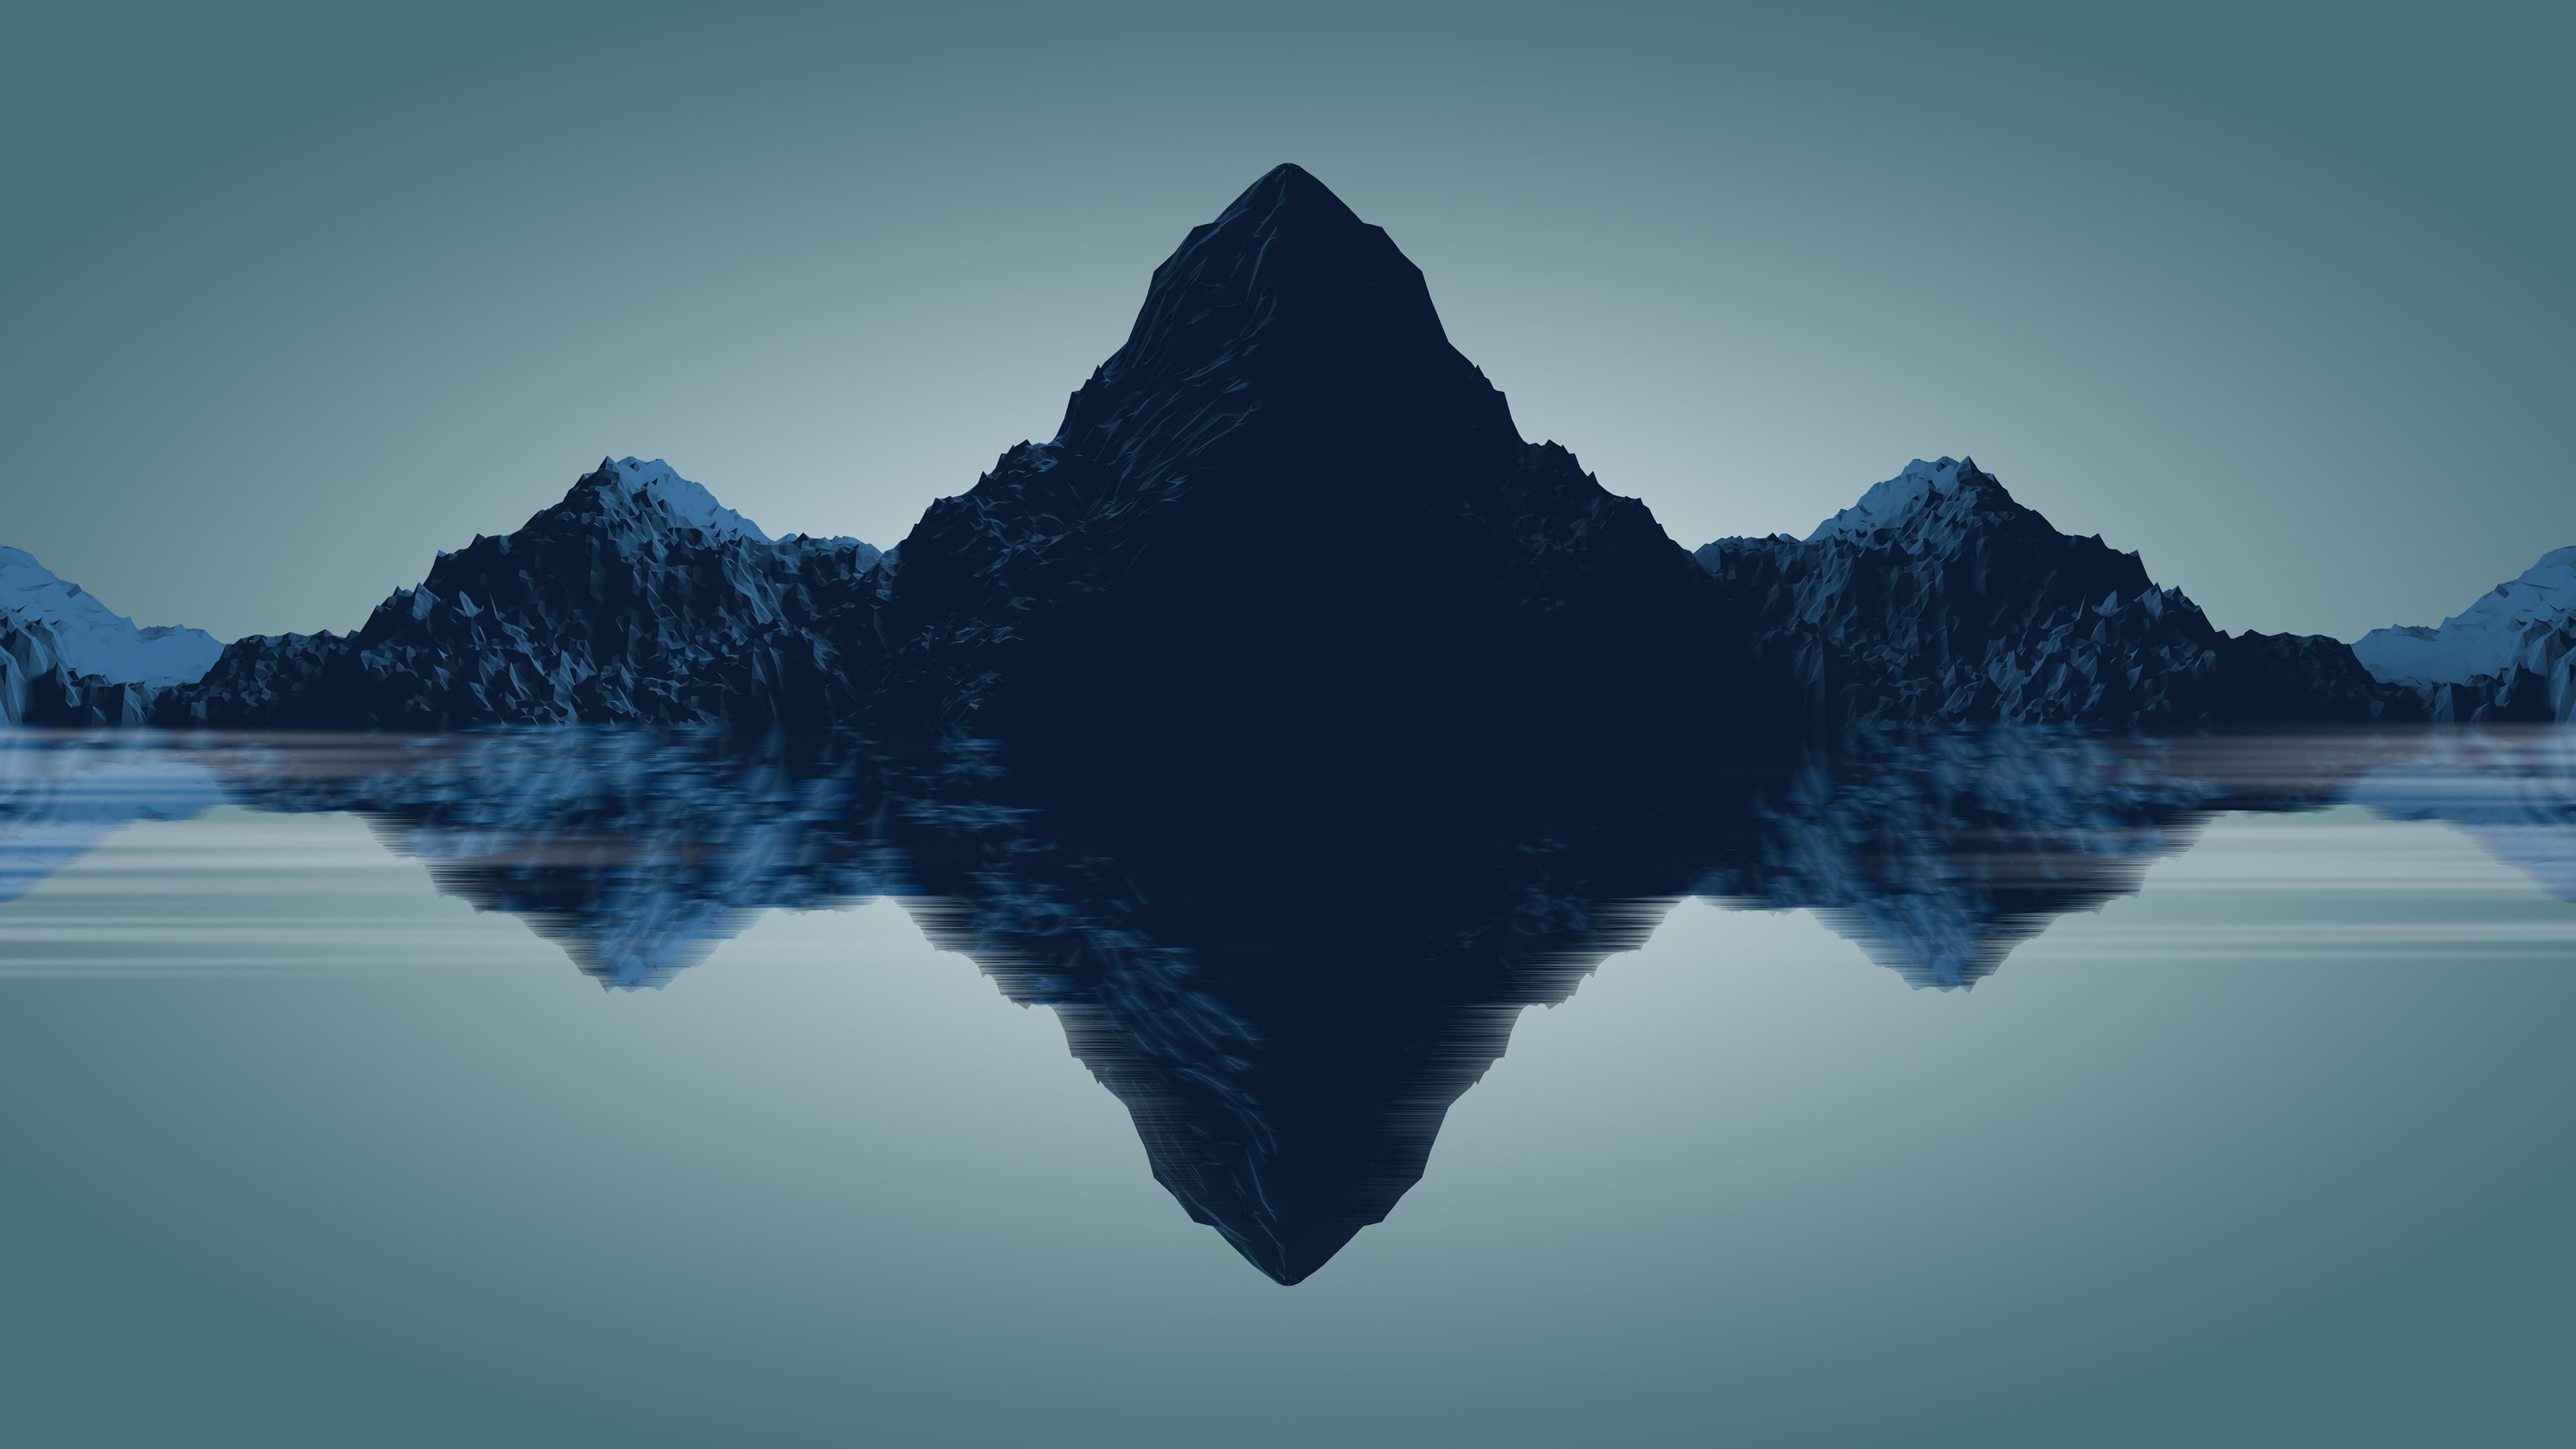 Mountain Landscape Abstract 4K Wallpaper